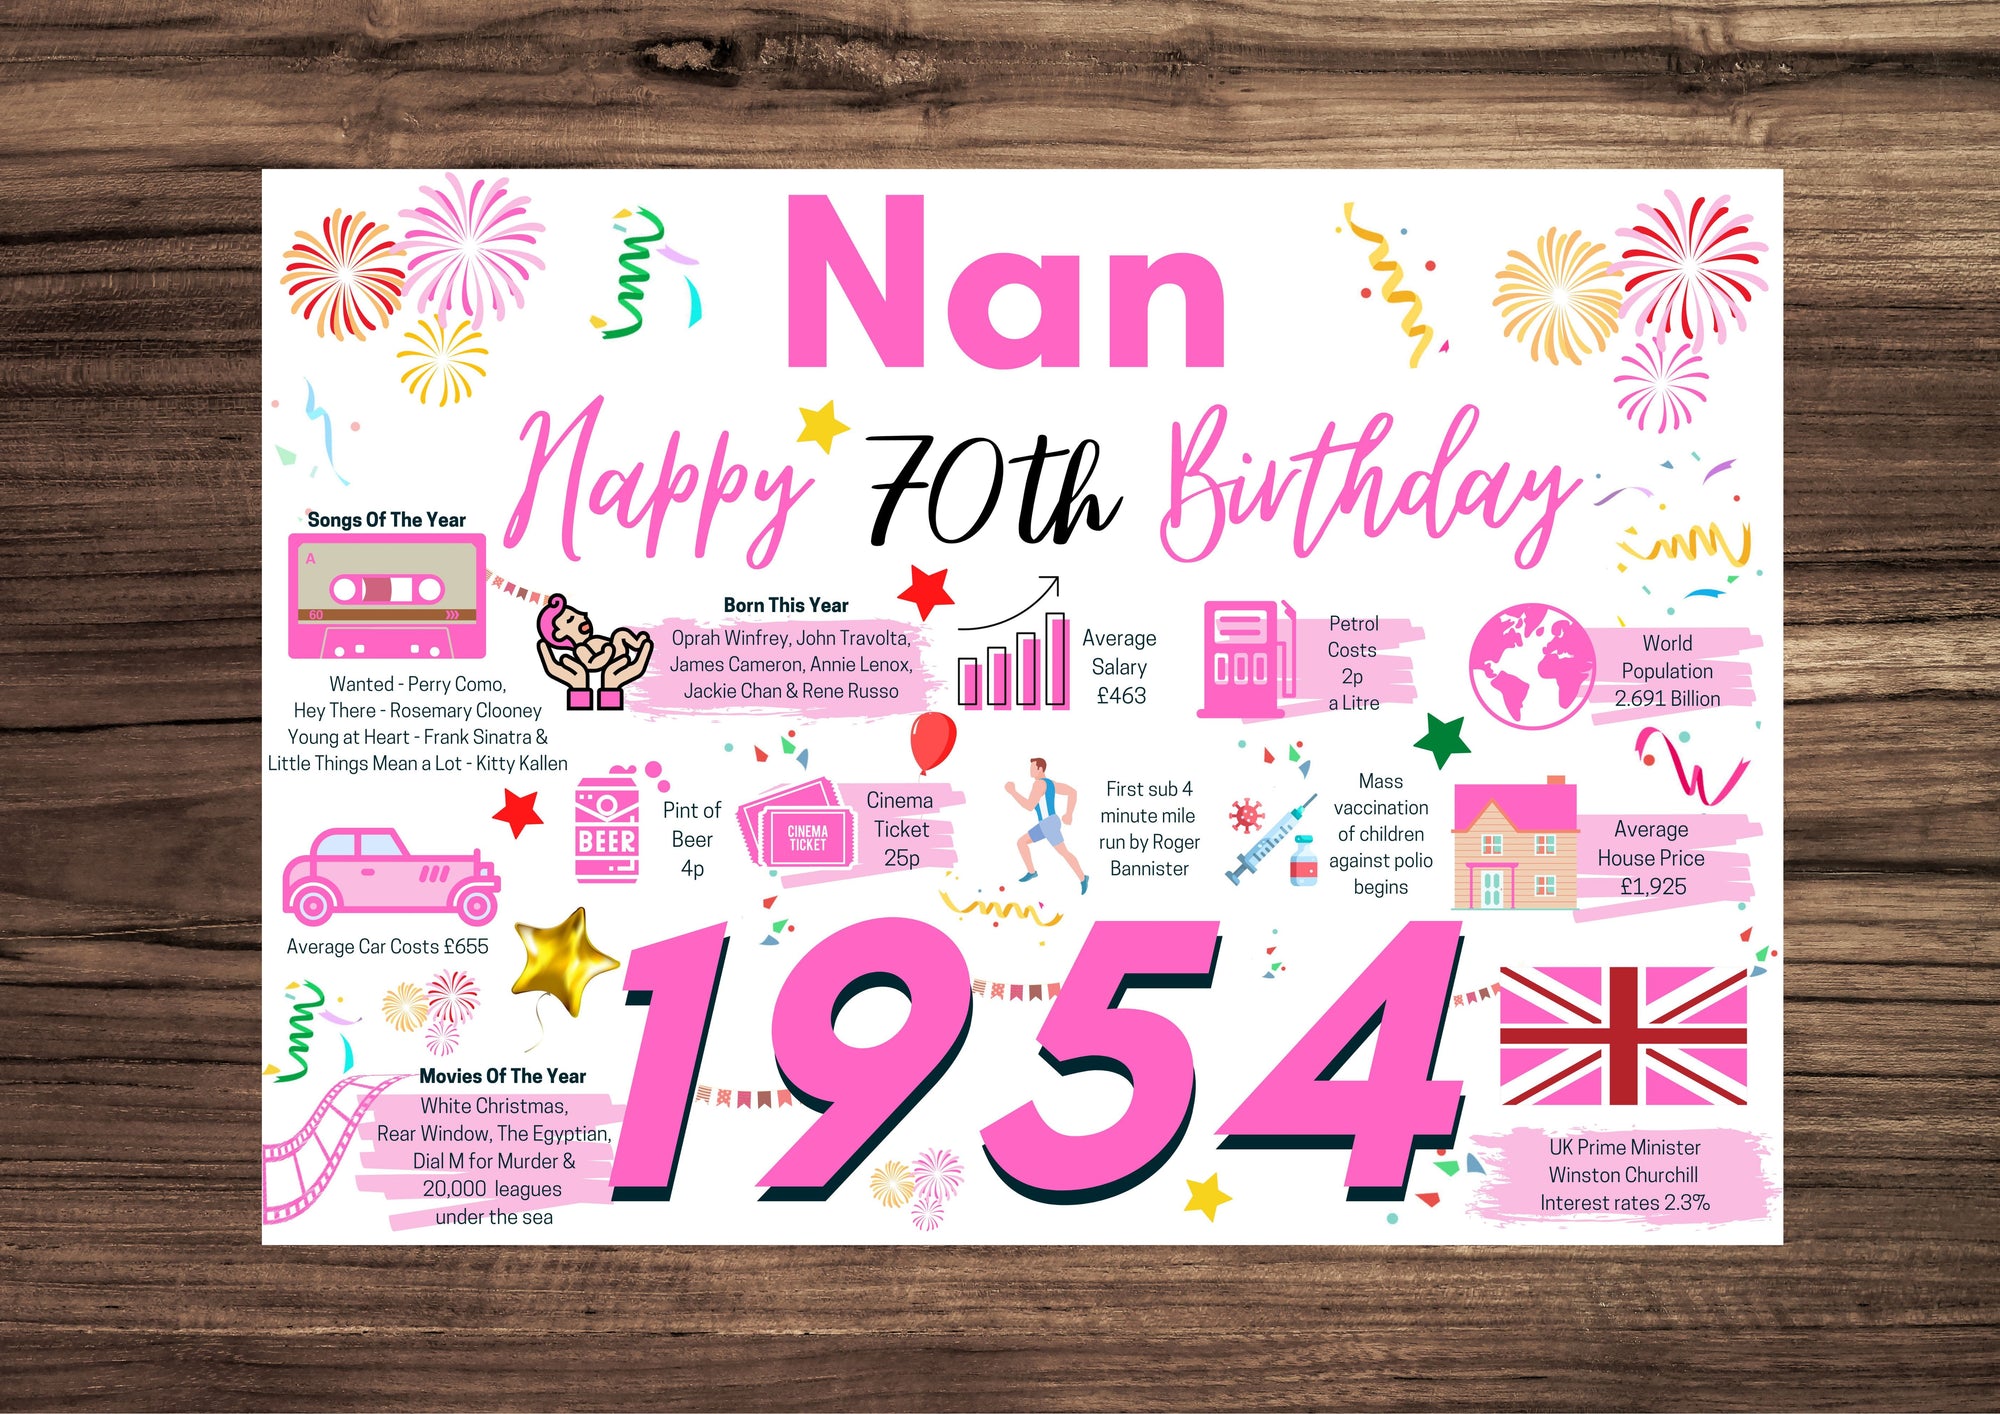 70th Birthday Card For Nan, Born In 1954 Facts Milestone